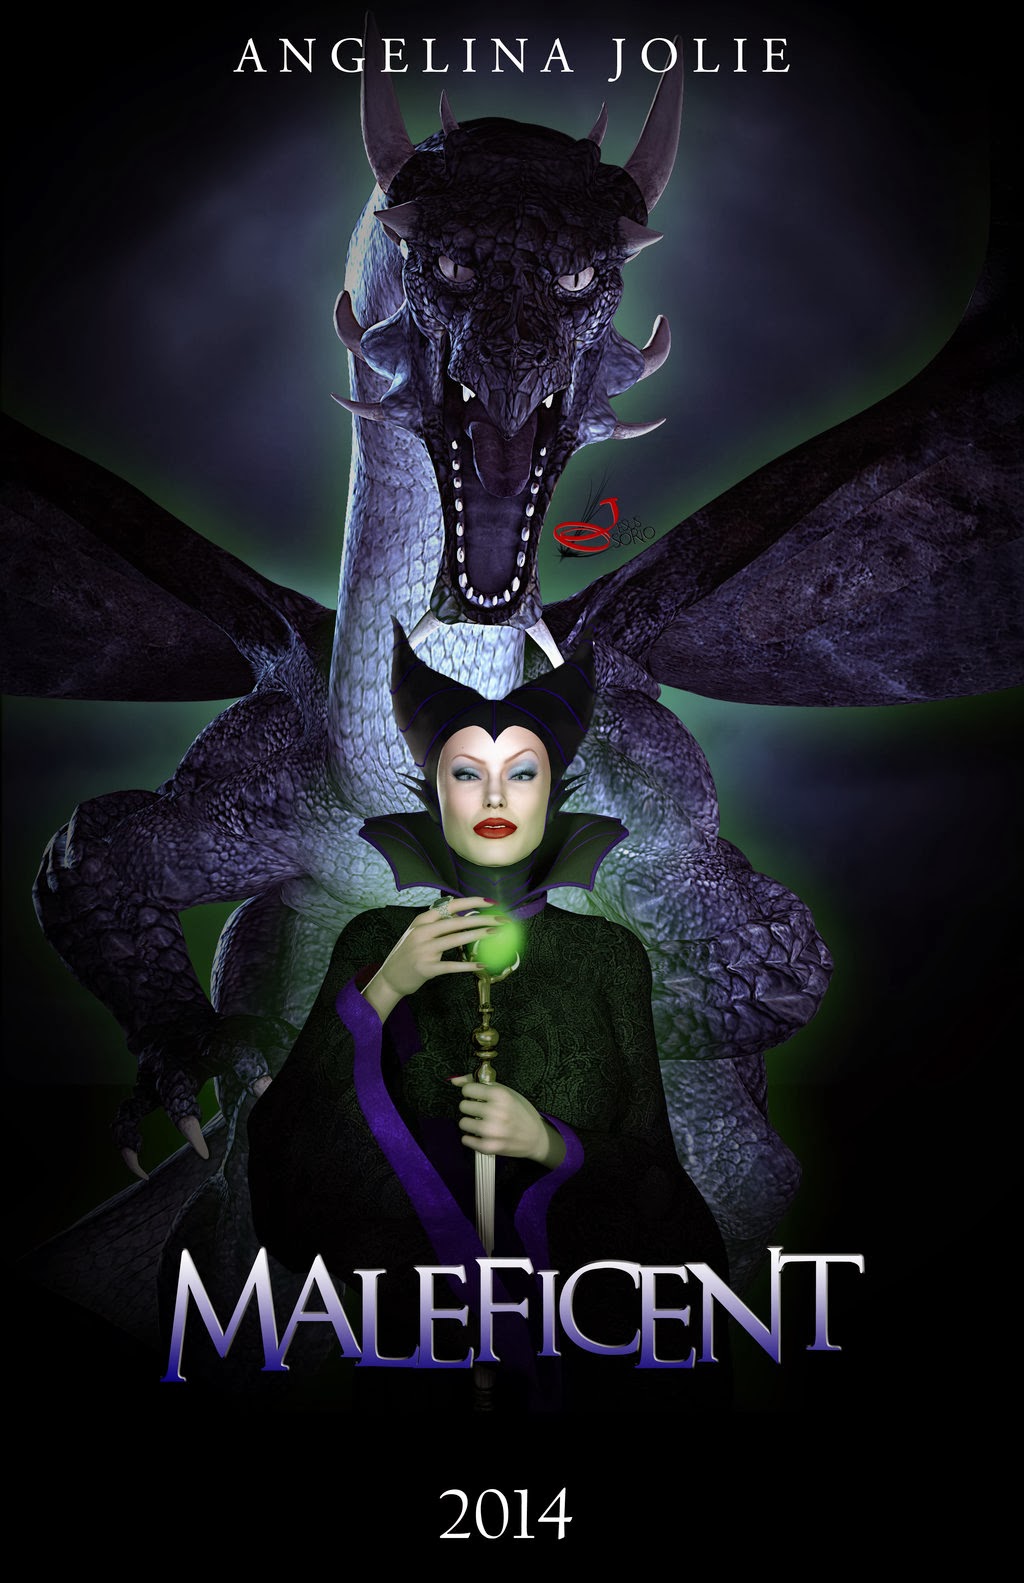 Maleficent (2014) - Movies Maniac1024 x 1583